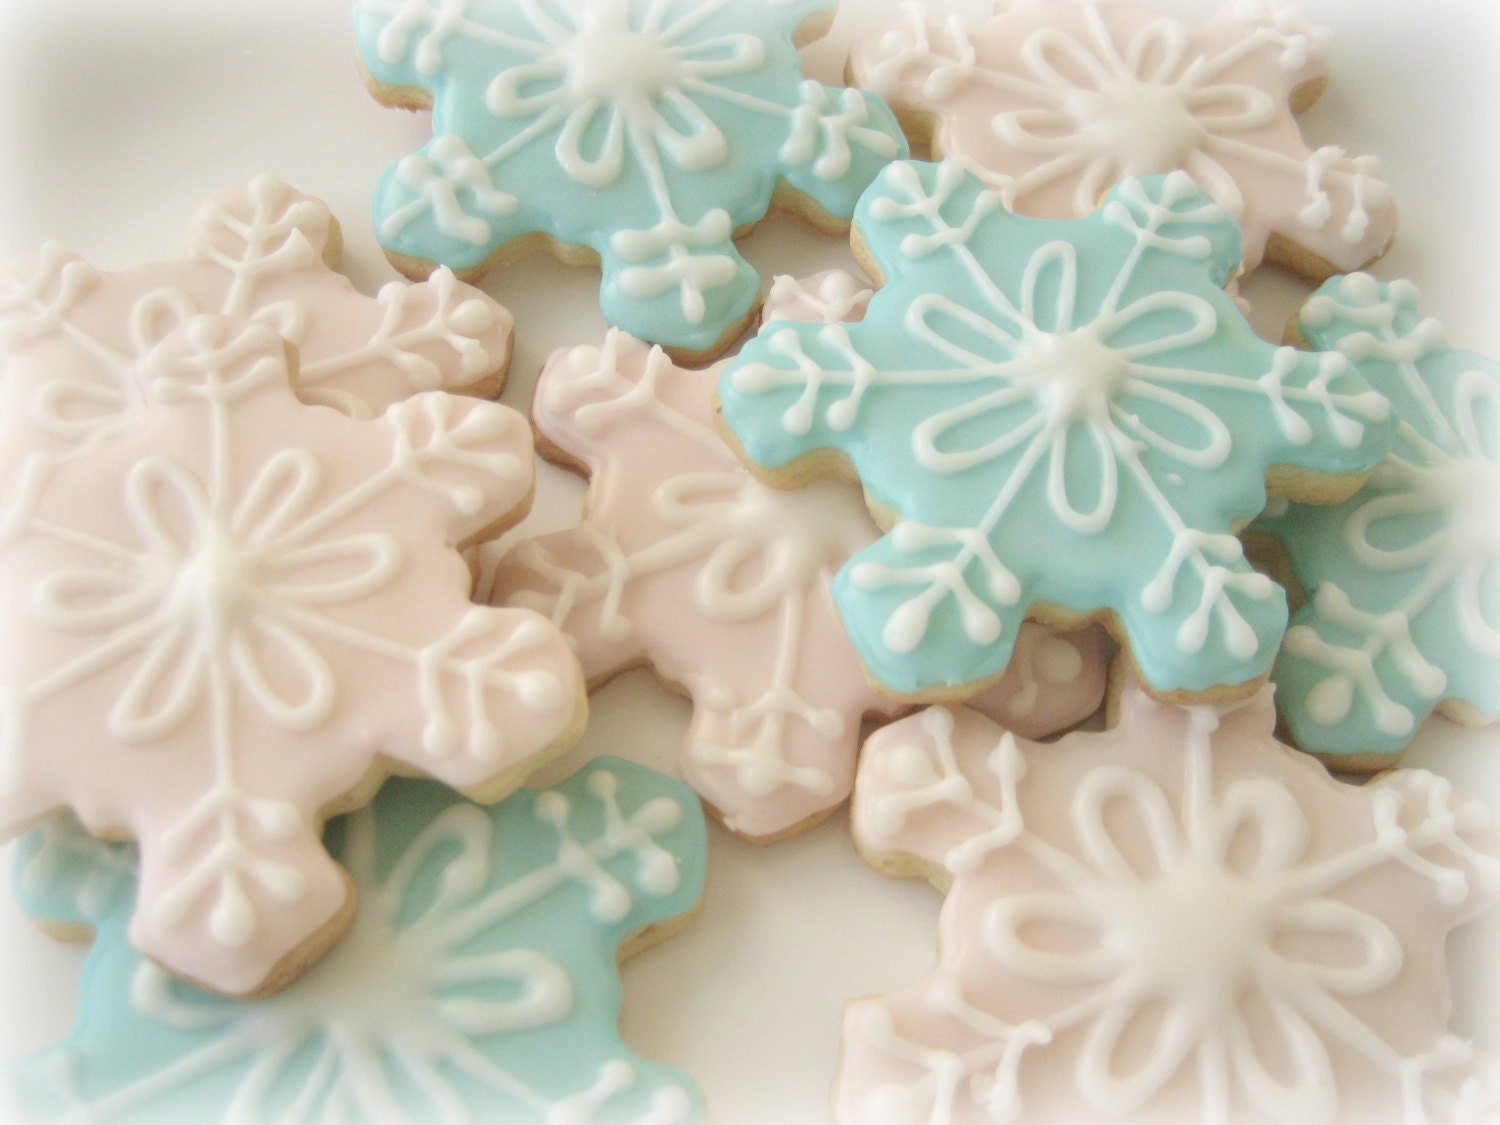 Disney Frozen Snowflake Sugar Cookies 1 Dozen by Zanabee on Etsy